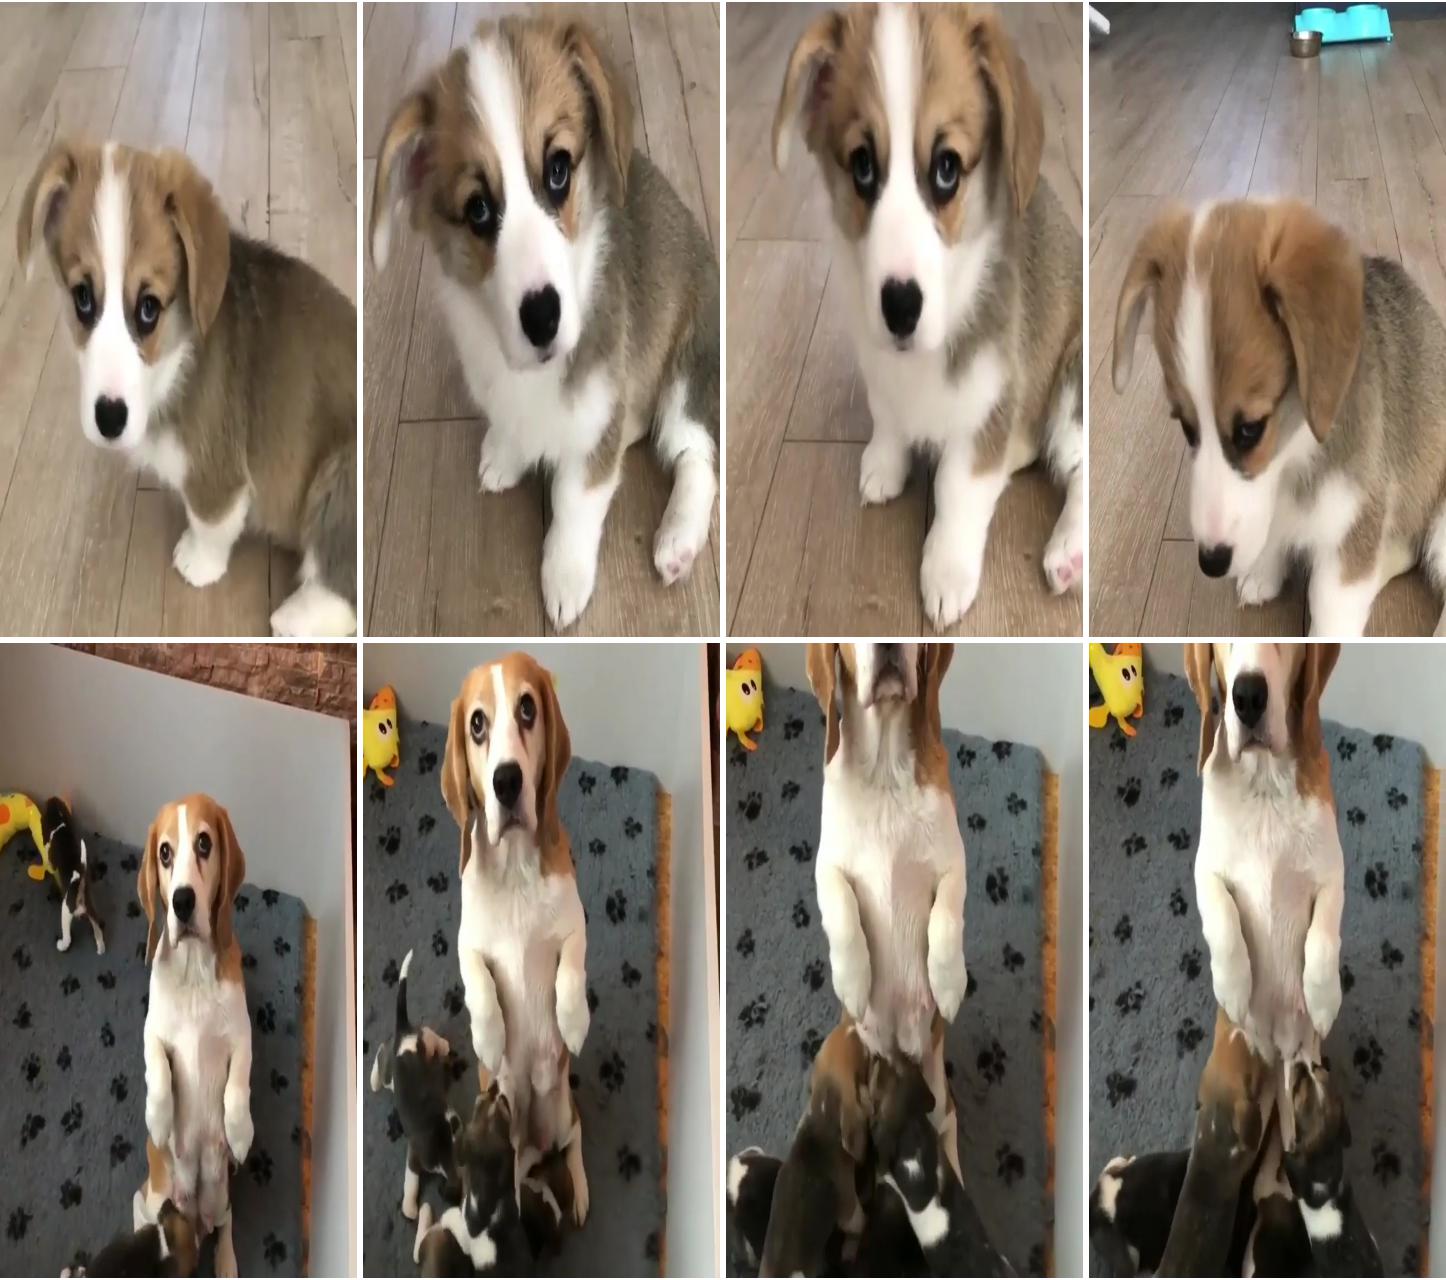 Her nose looks like a heart; beagle family